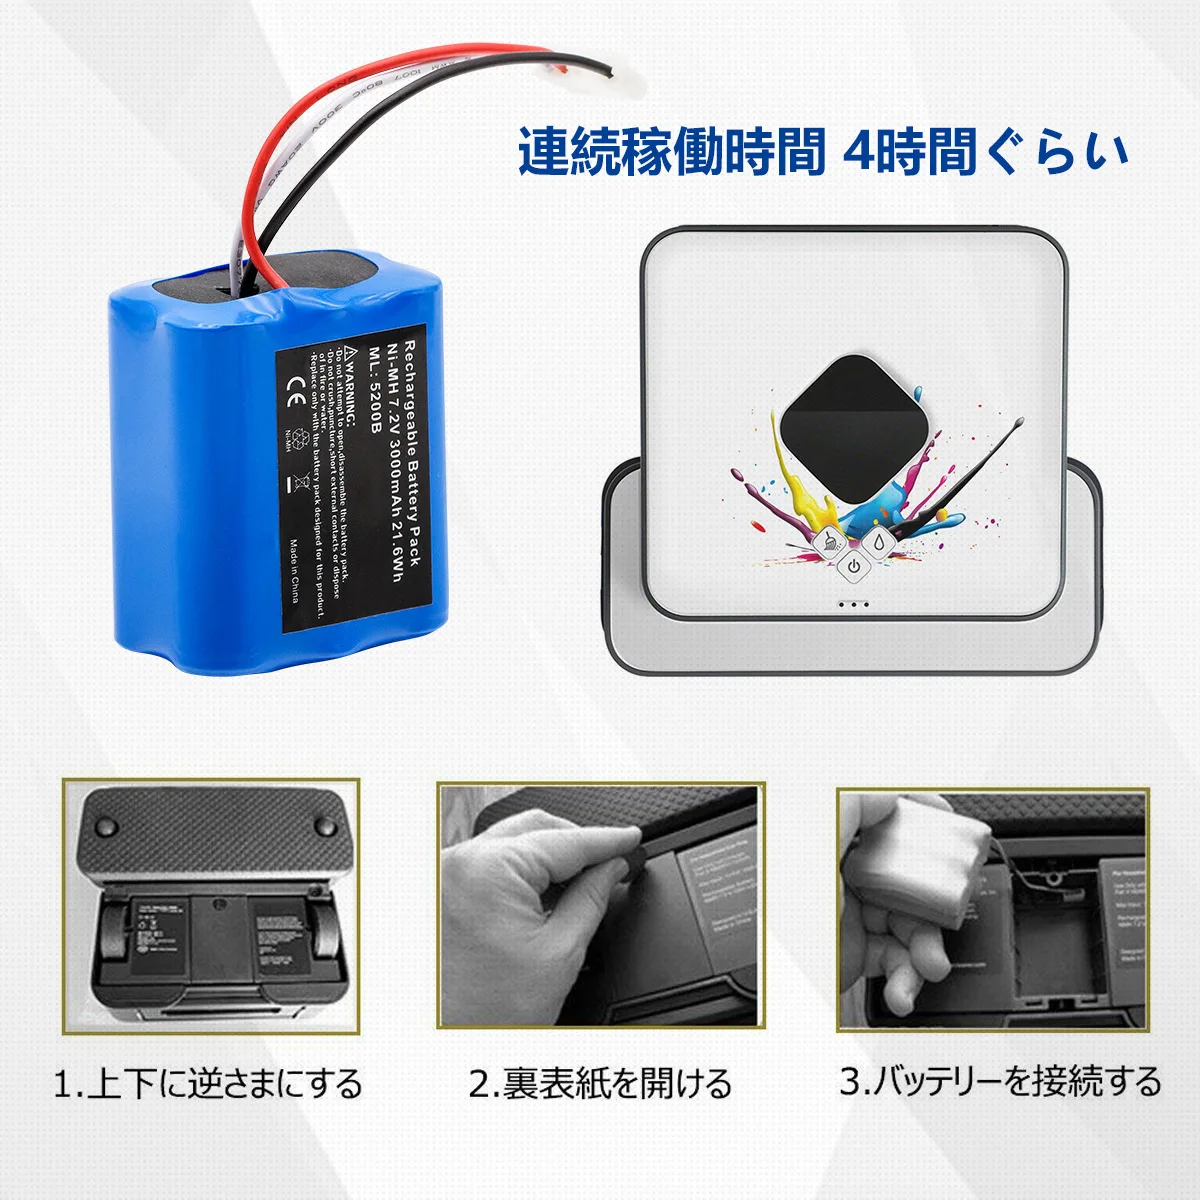 Upgrade 7.2V 3000mAh Battery for iRobot Roomba Braava 380 380T Mint 5200B Ni-MH 3000mAh 3.0Ah 7.2v Rechargeable Battery images - 6